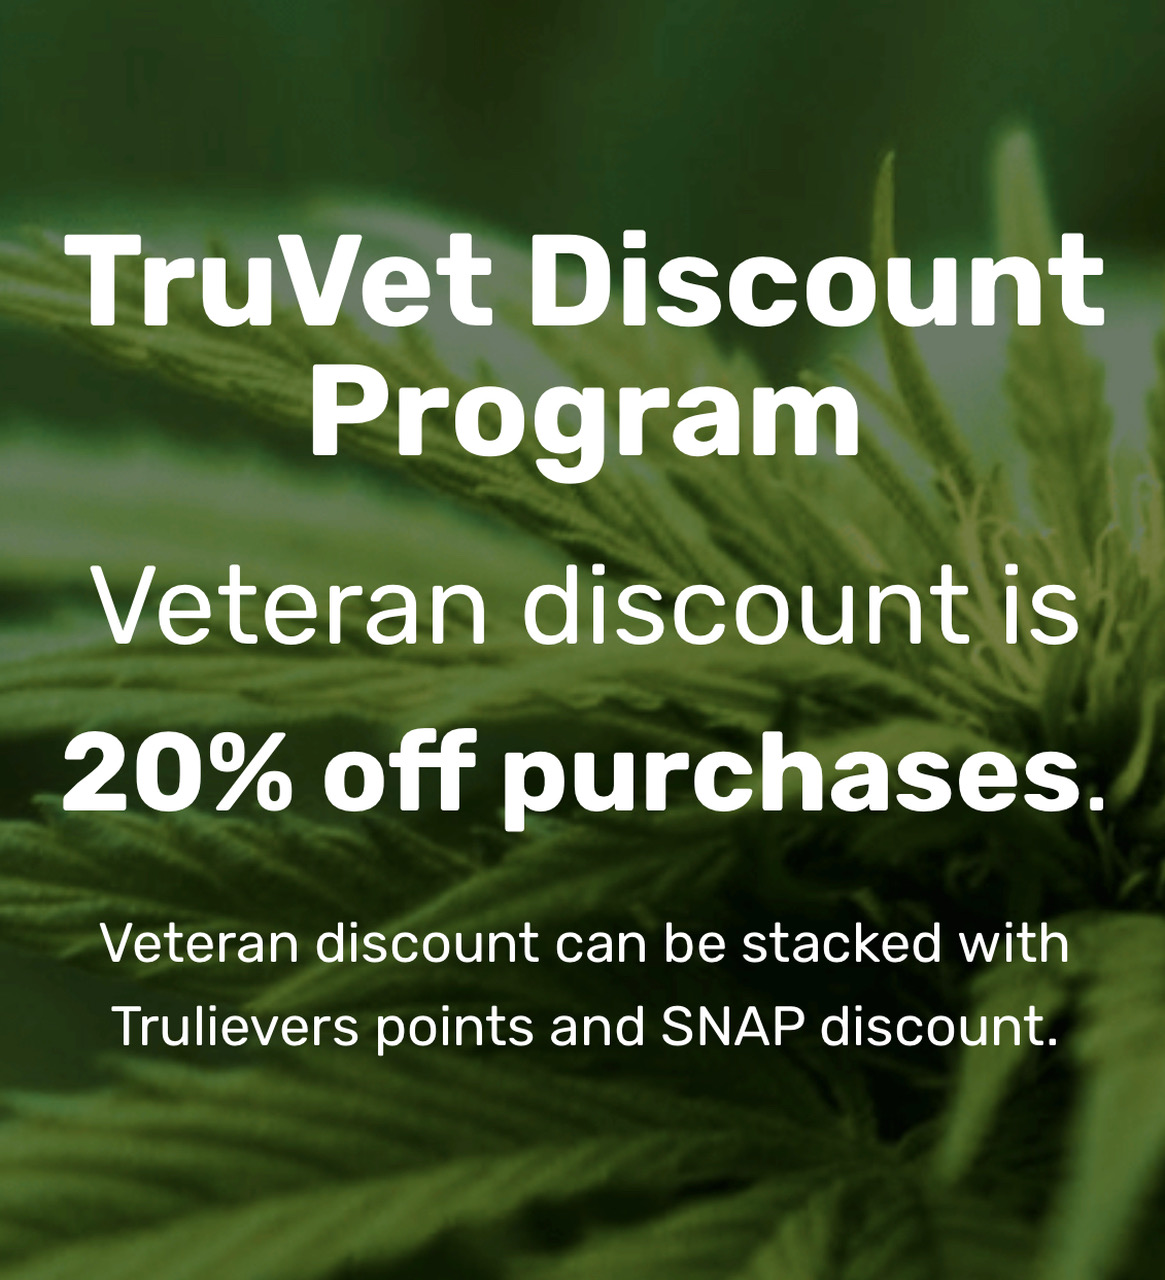 Trulieve Veterans Discount